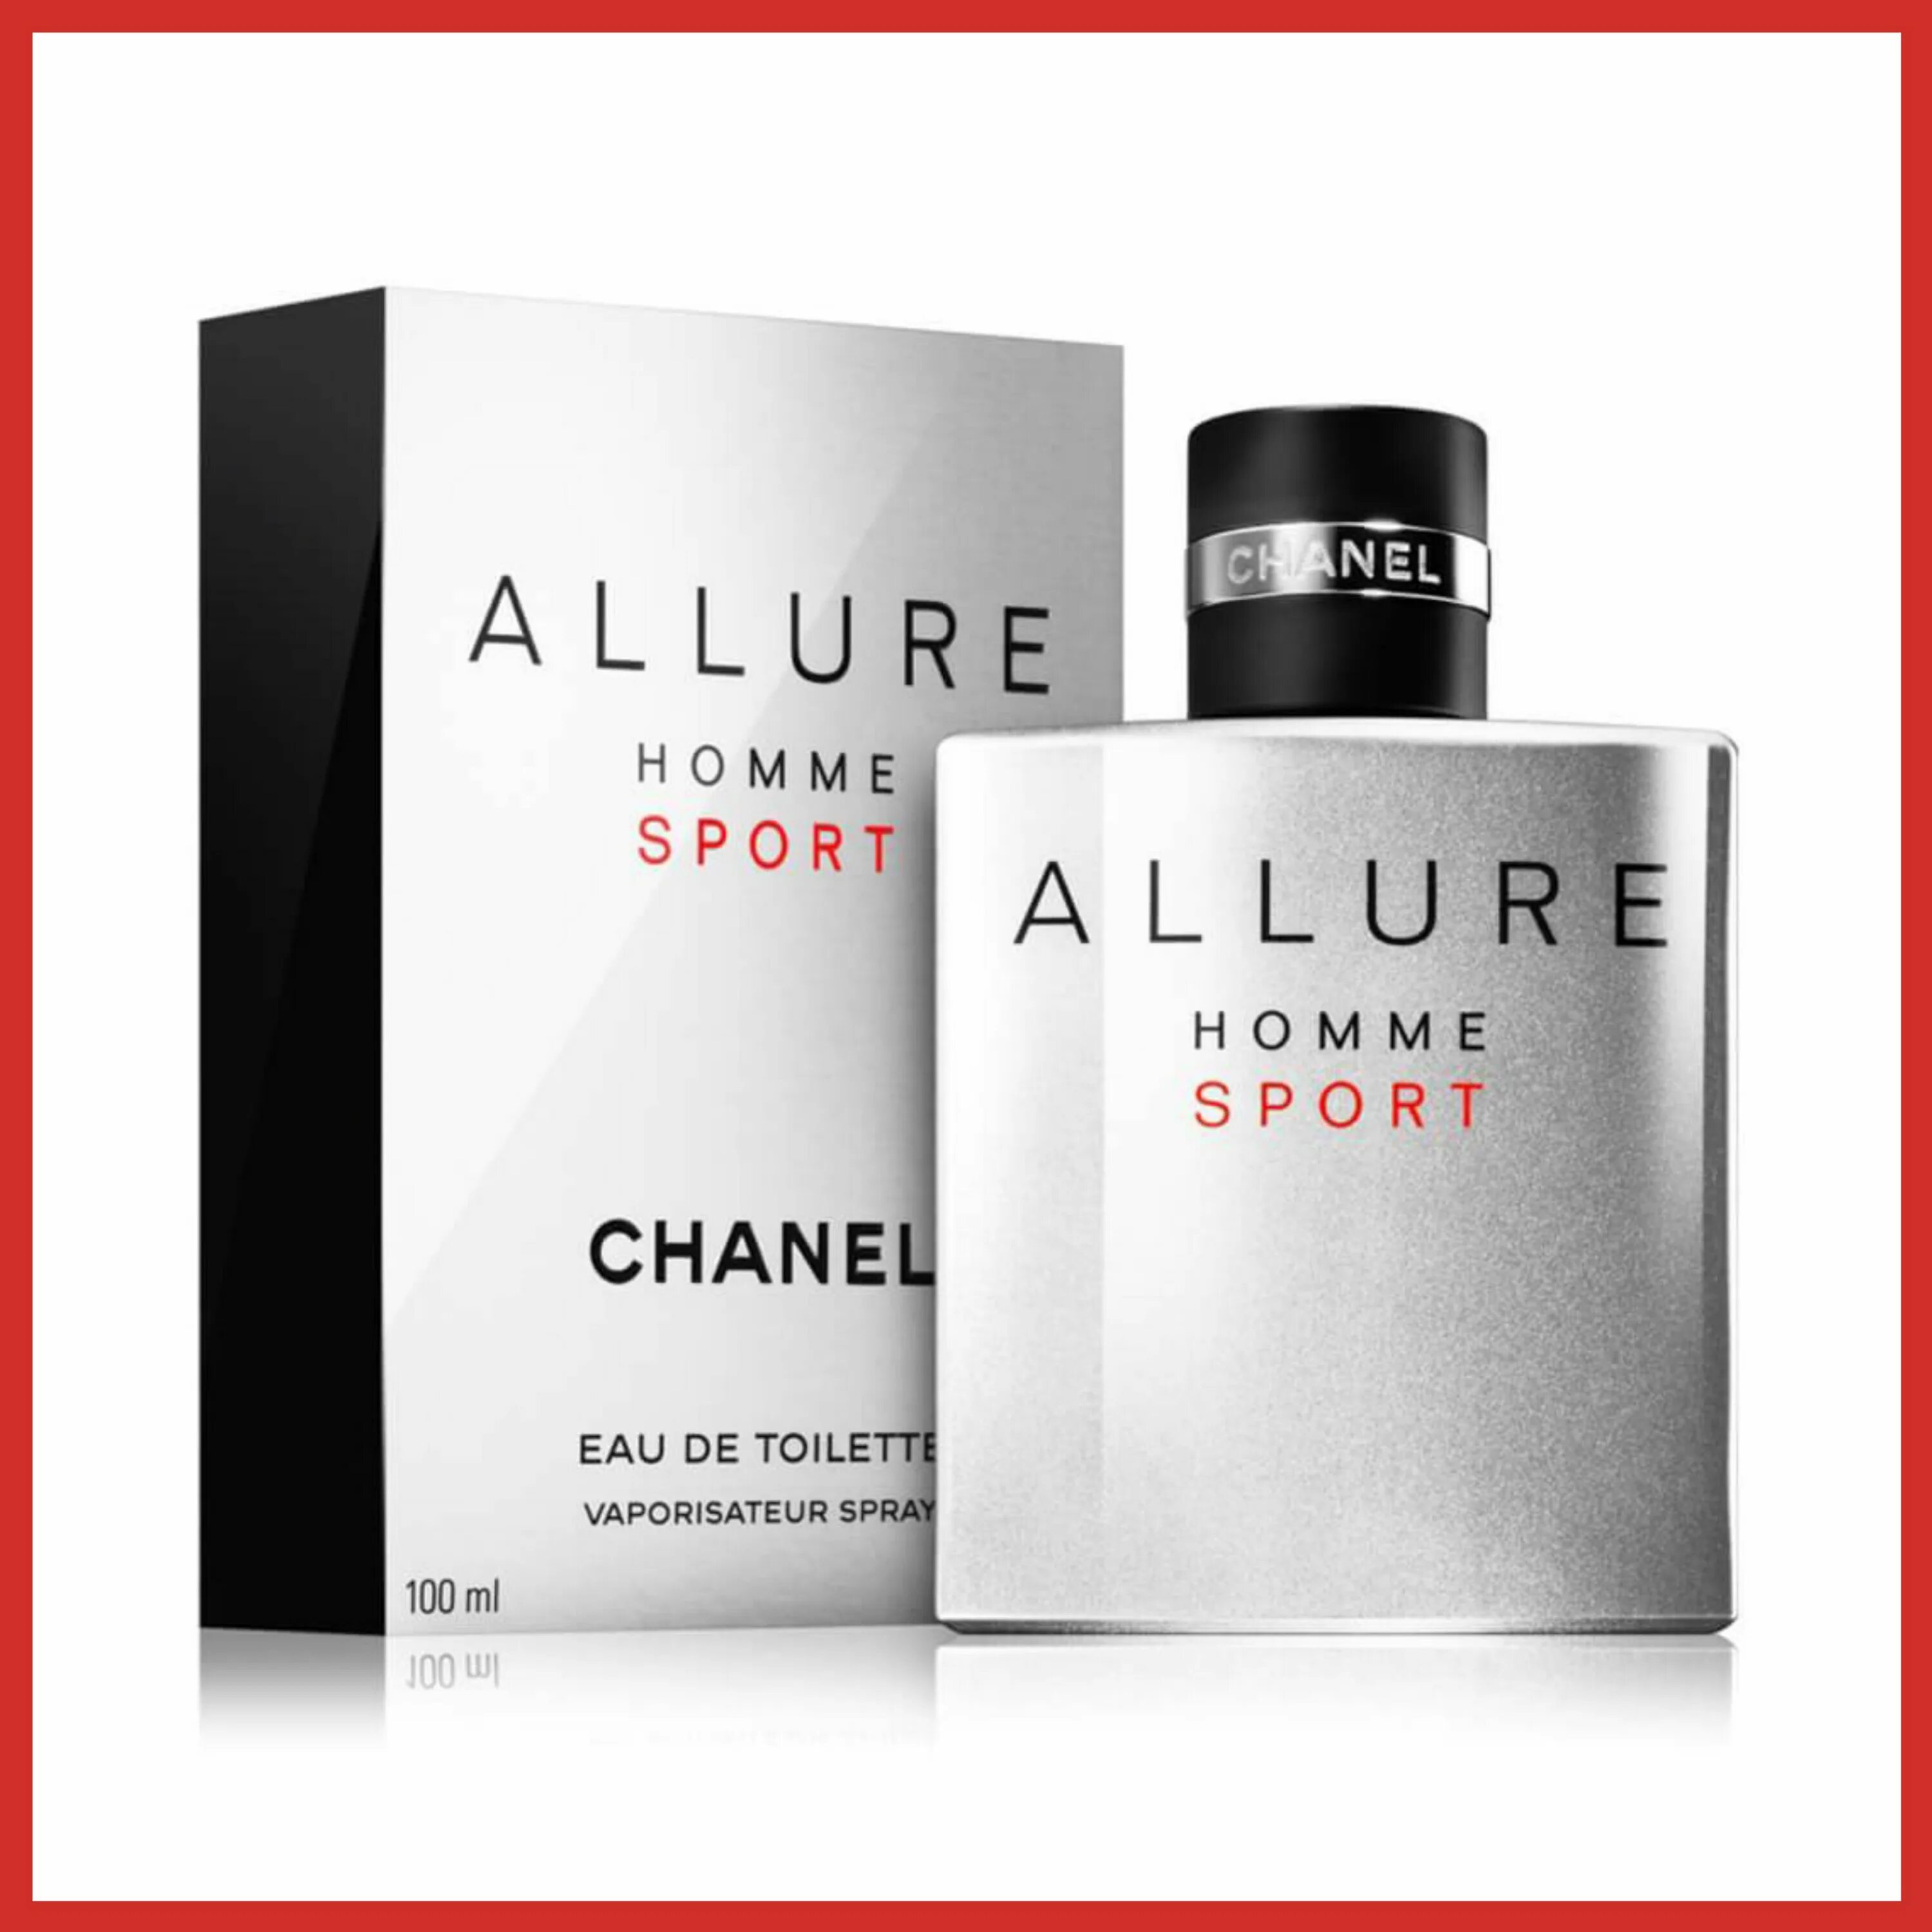 Allure homme sport eau. Chanel Allure homme Sport 100ml. Духи Шанель Аллюр спорт. Chanel Allure homme Sport EDT 150ml. Духи Chanel Allure homme Sport.